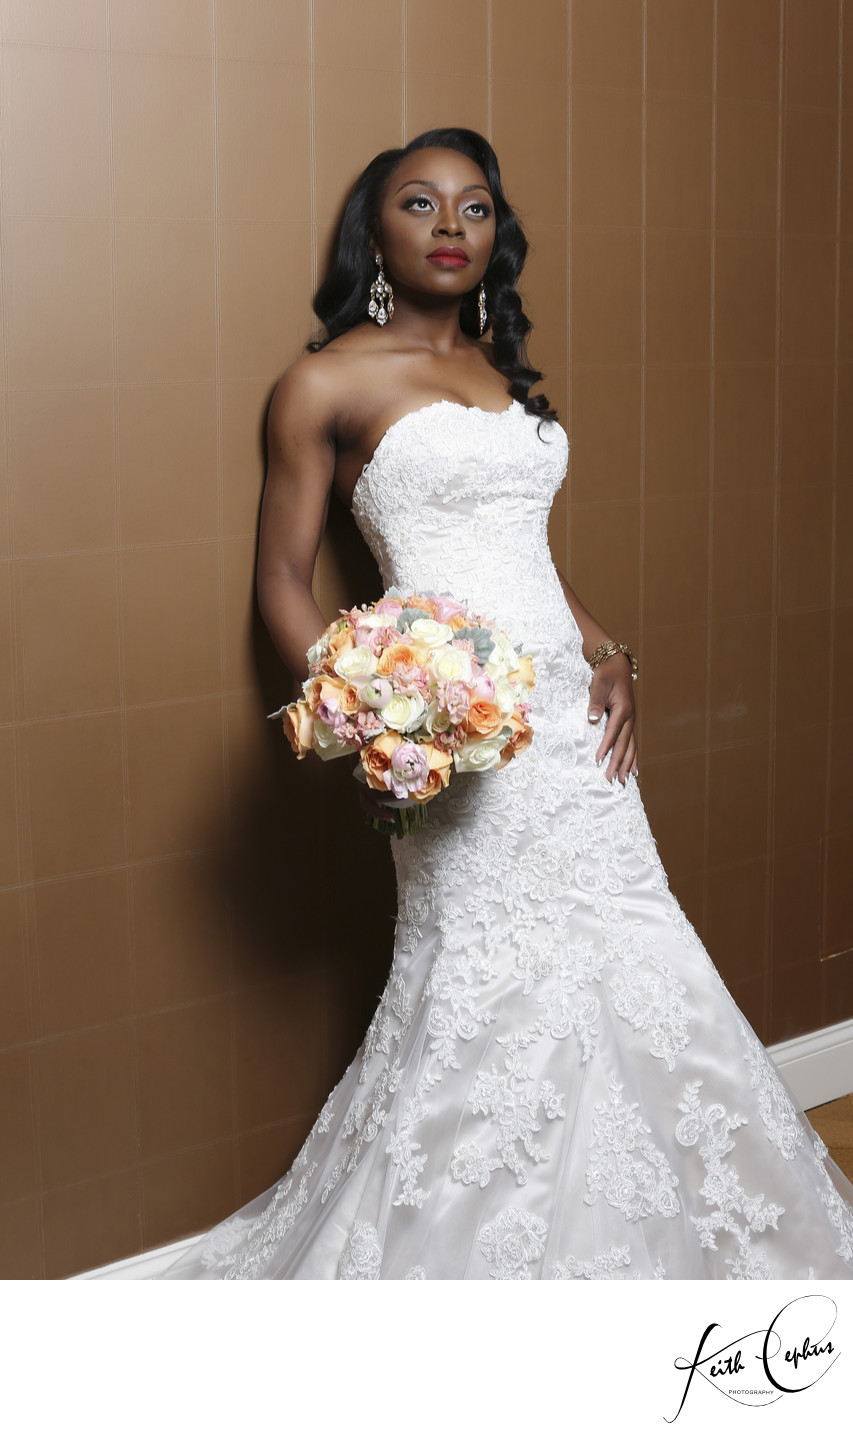 Top Nigerian wedding photographer